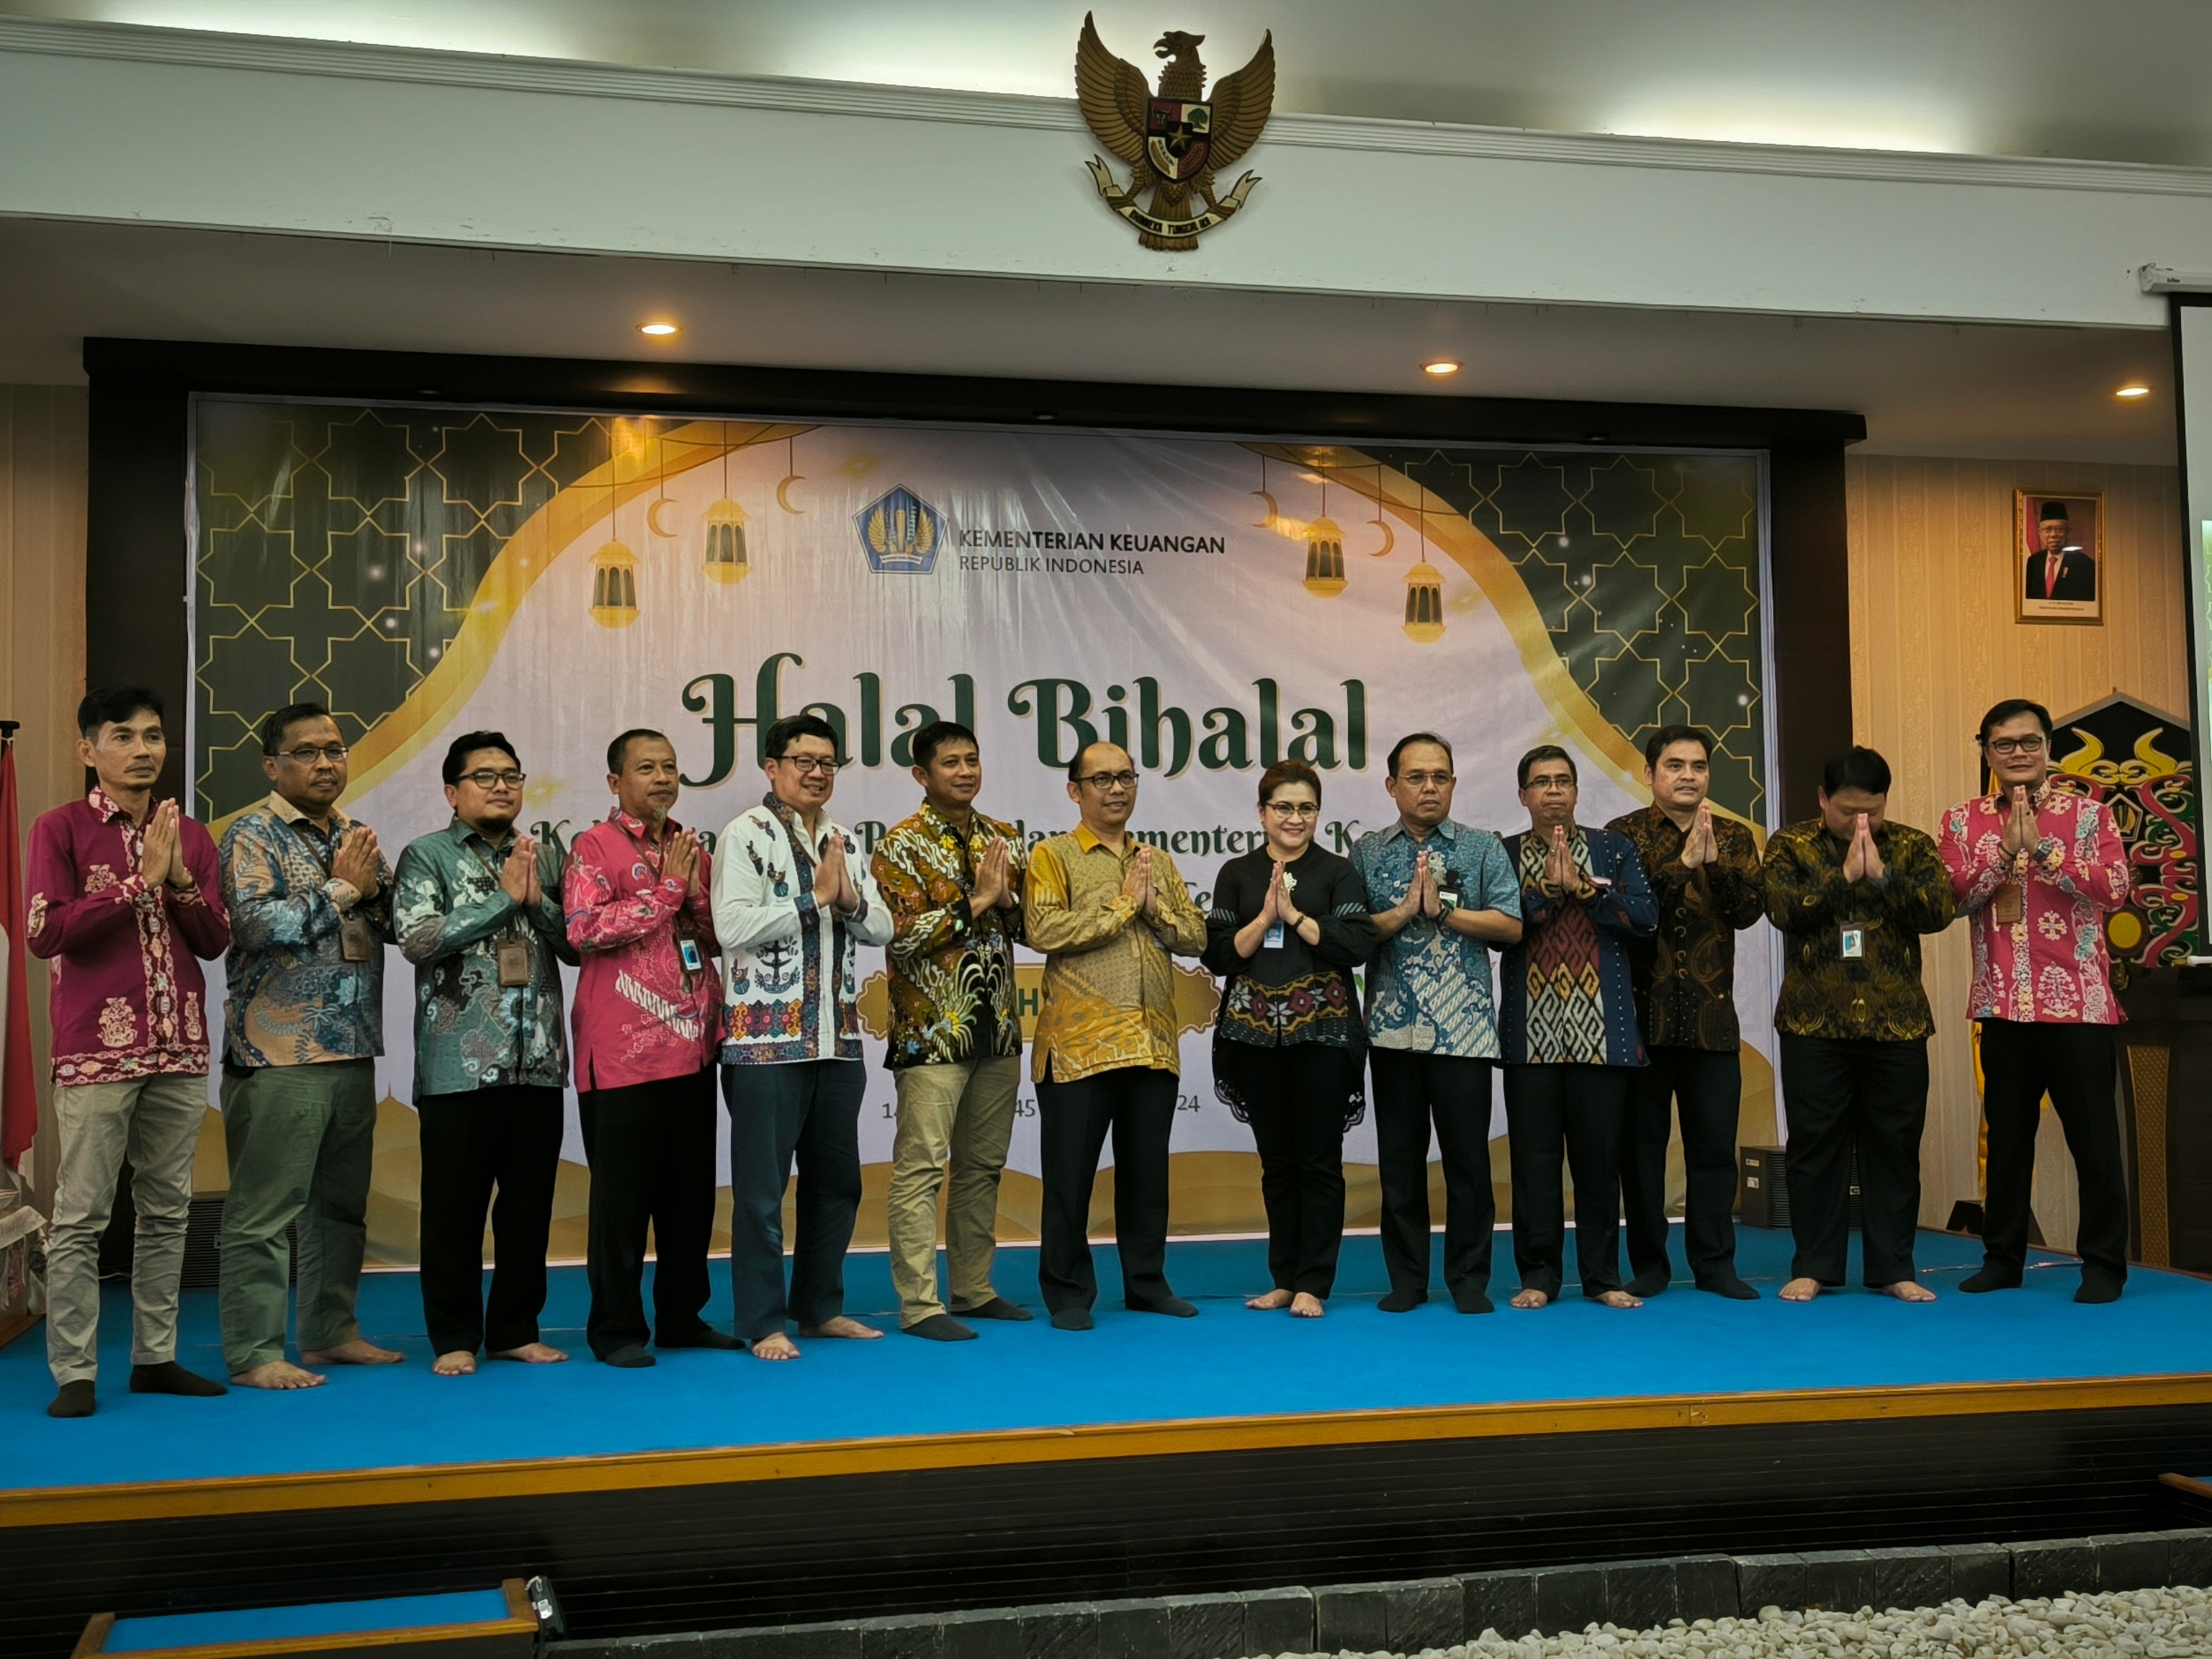 Halal Bihalal Keluarga Besar Perwakilan Kementerian Keuangan Provinsi Kalimantan Tengah